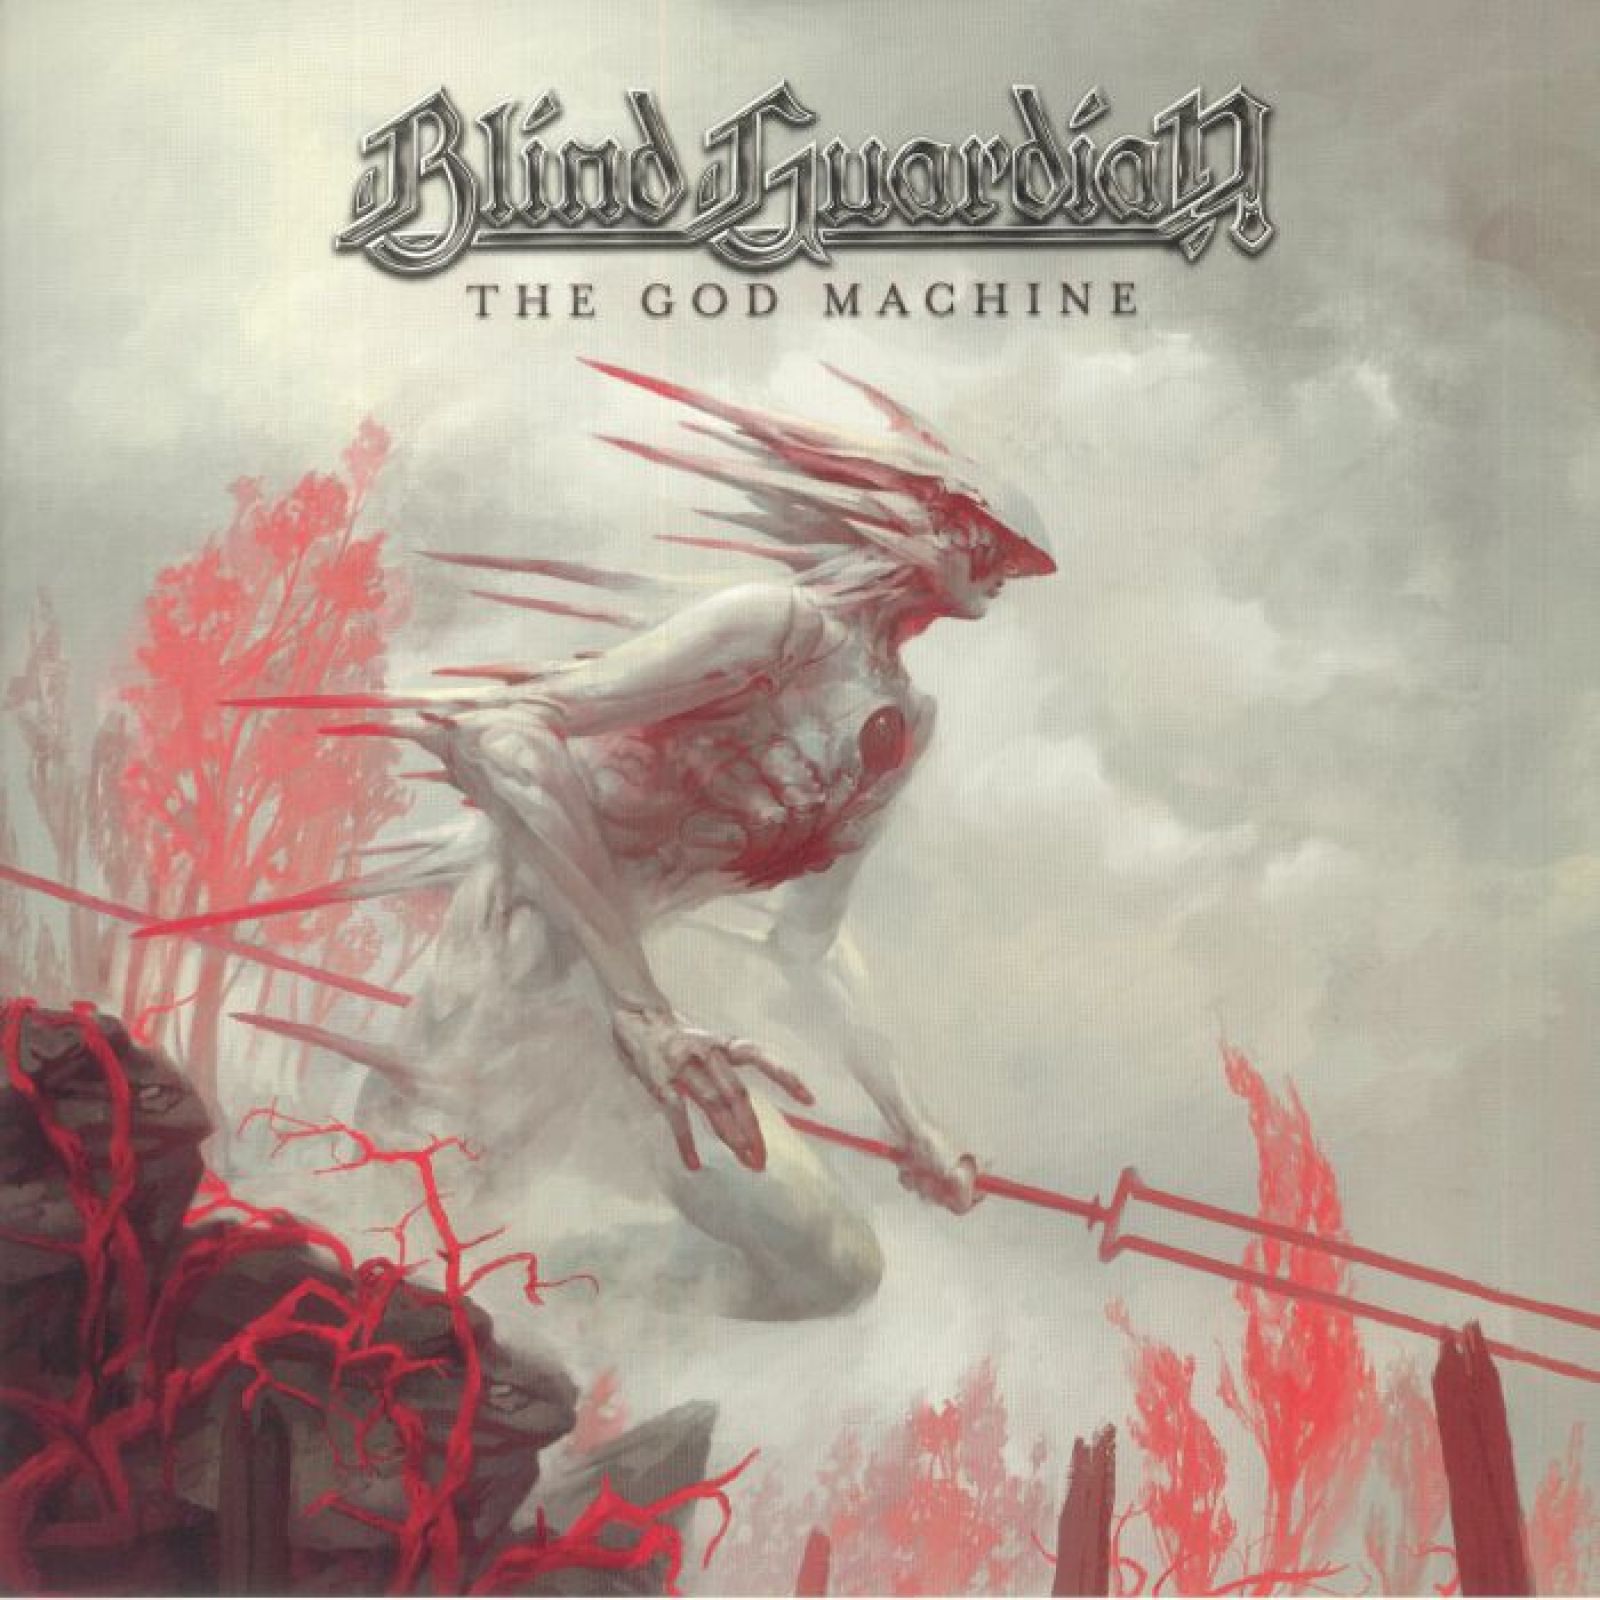 Виниловая пластинка Blind Guardian, The God Machine (0727361575519) виниловые пластинки nuclear blast helloween straight out of hell 2lp